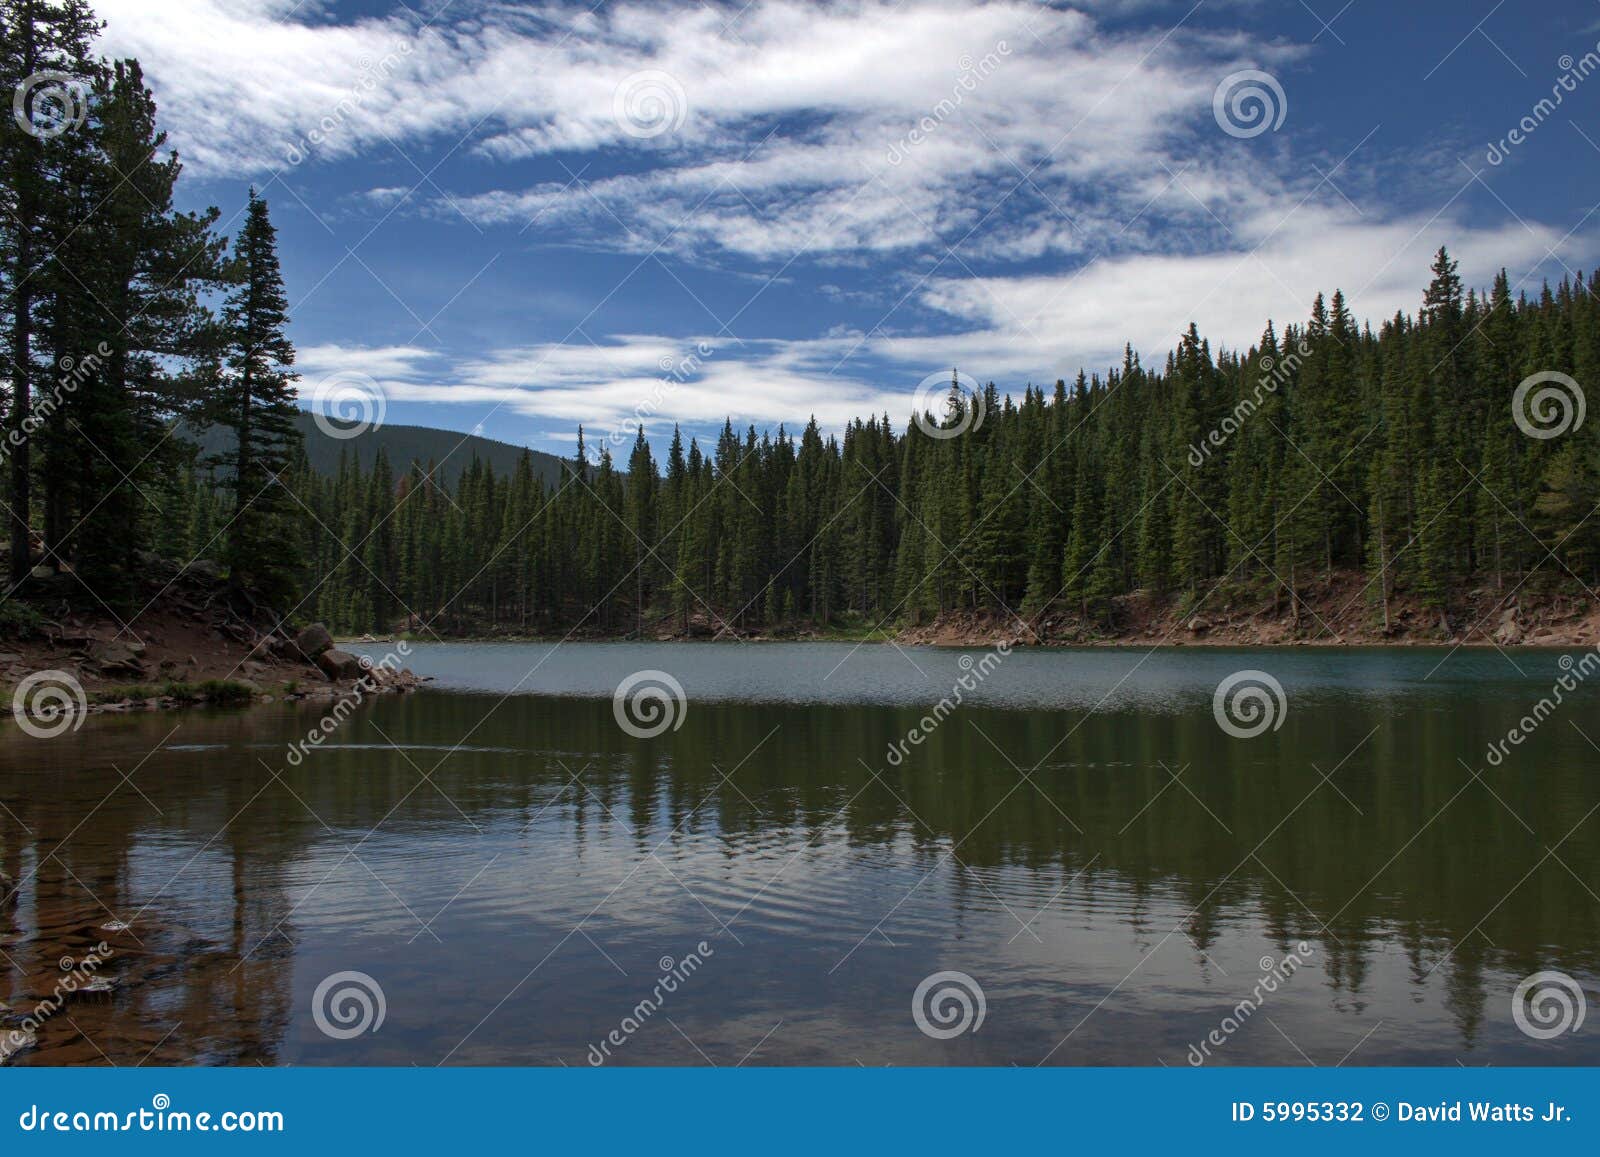 bear lake in colorado